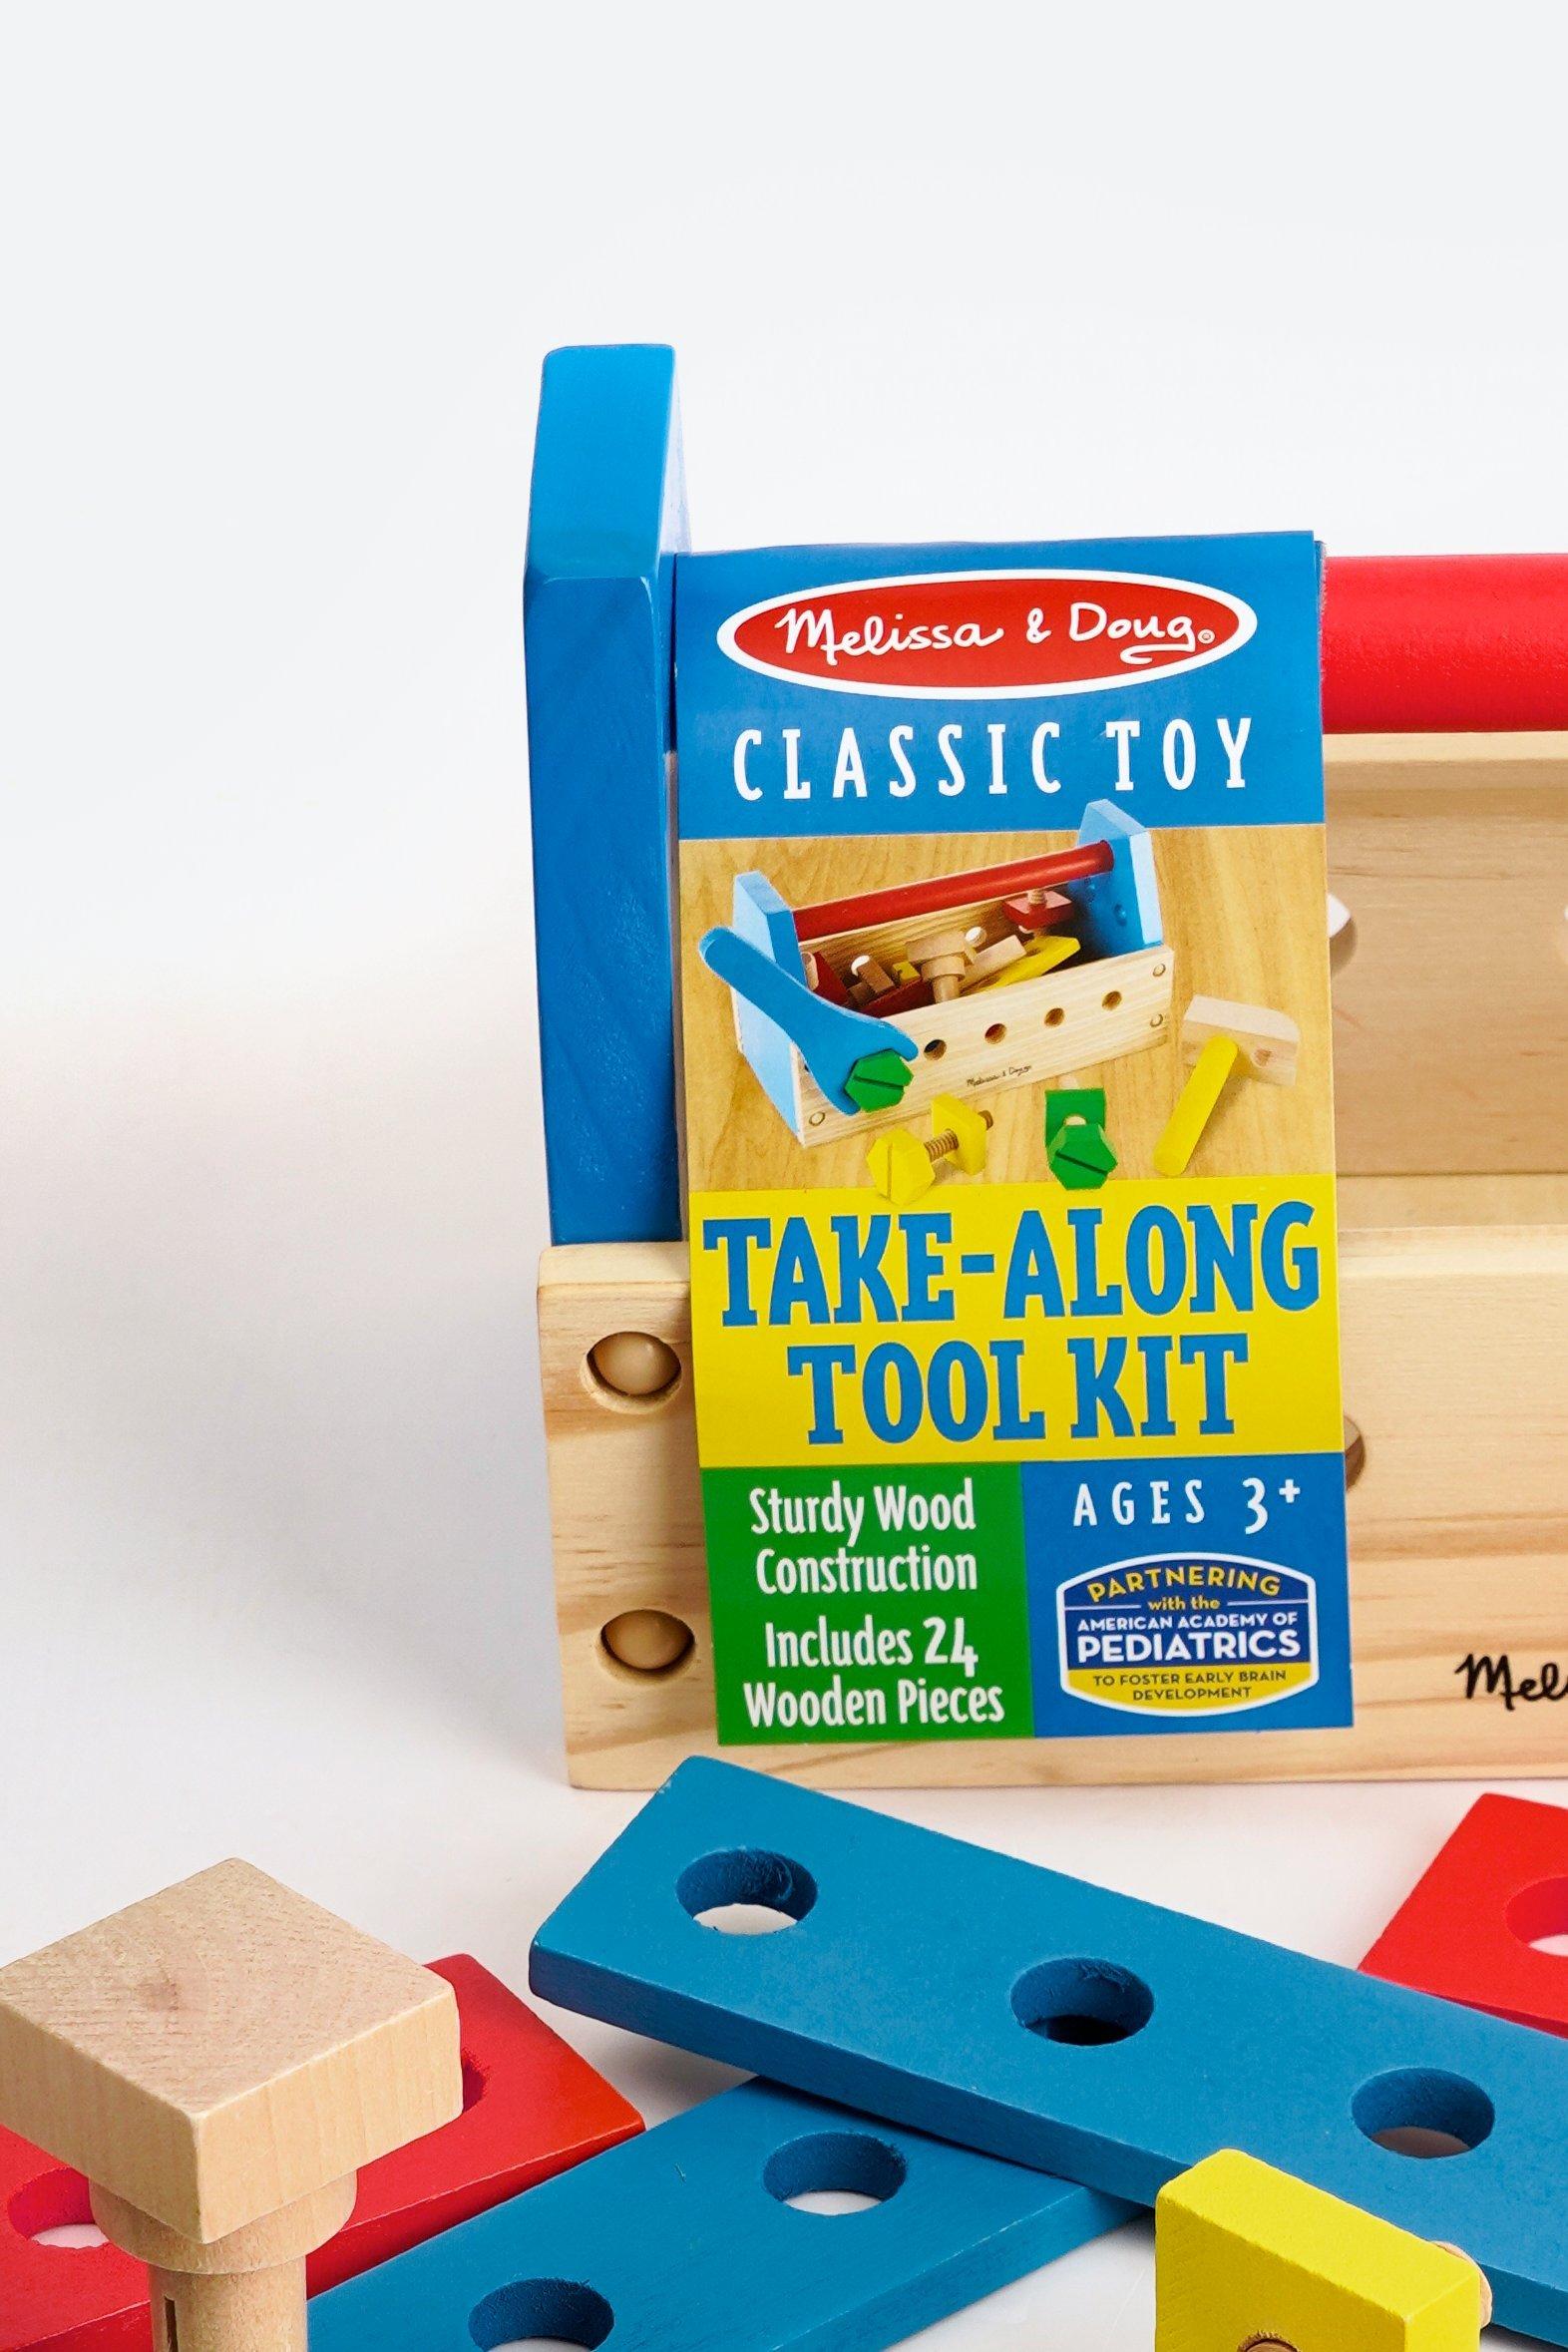 Melissa & Doug Classic Toy Tool-Kit, Take-Along